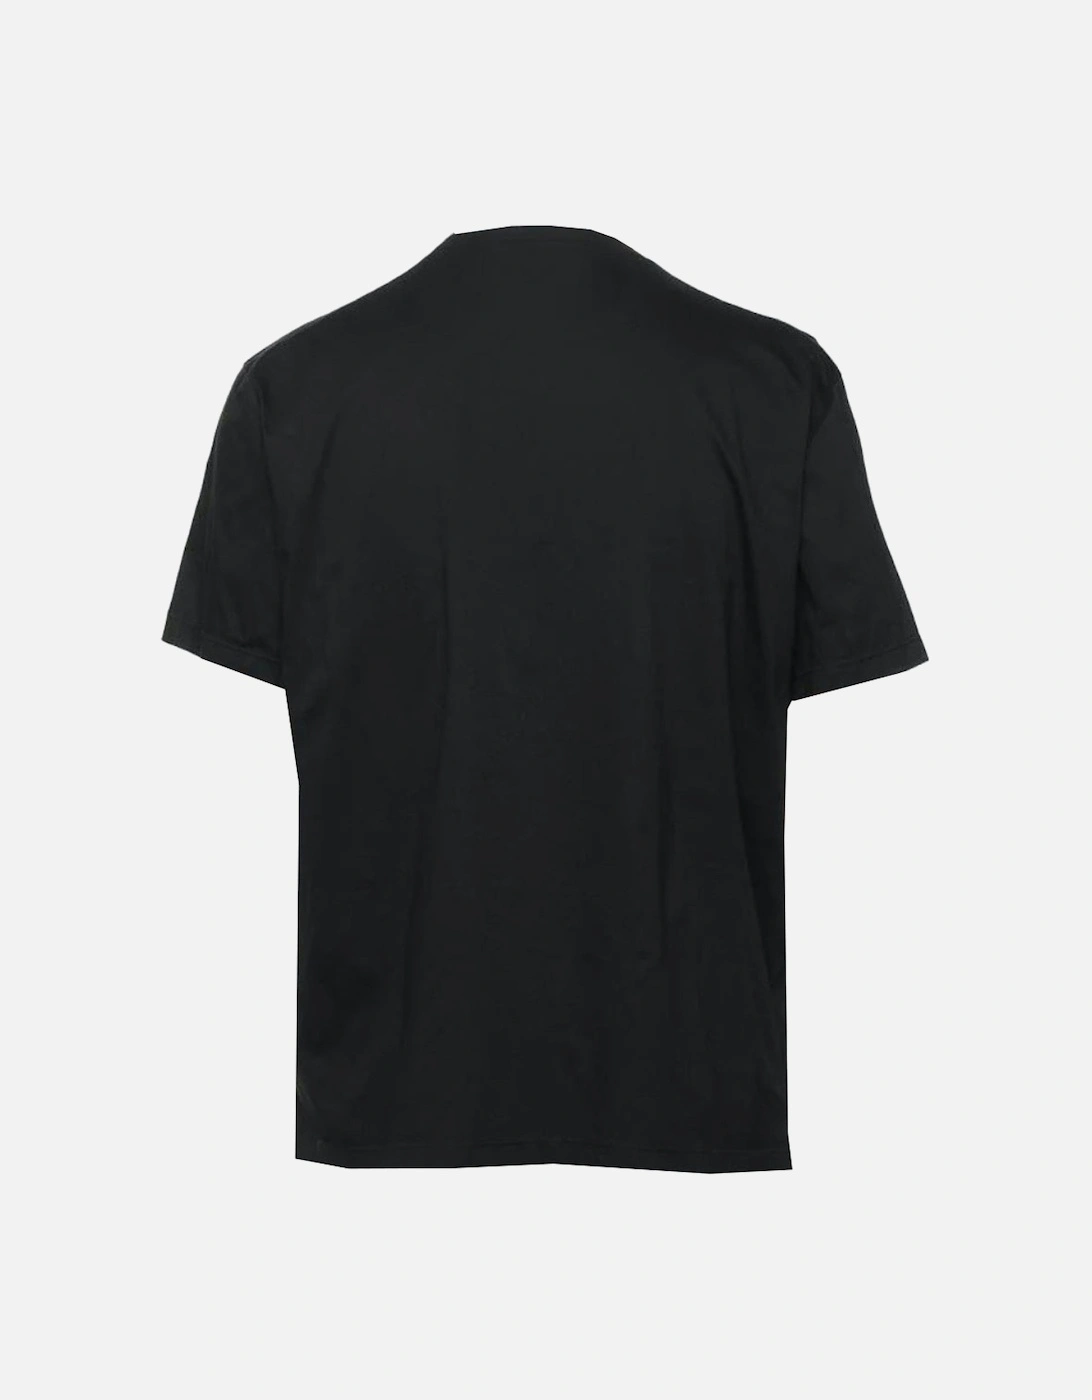 64 Maple Leaf Box Fit Black T-Shirt